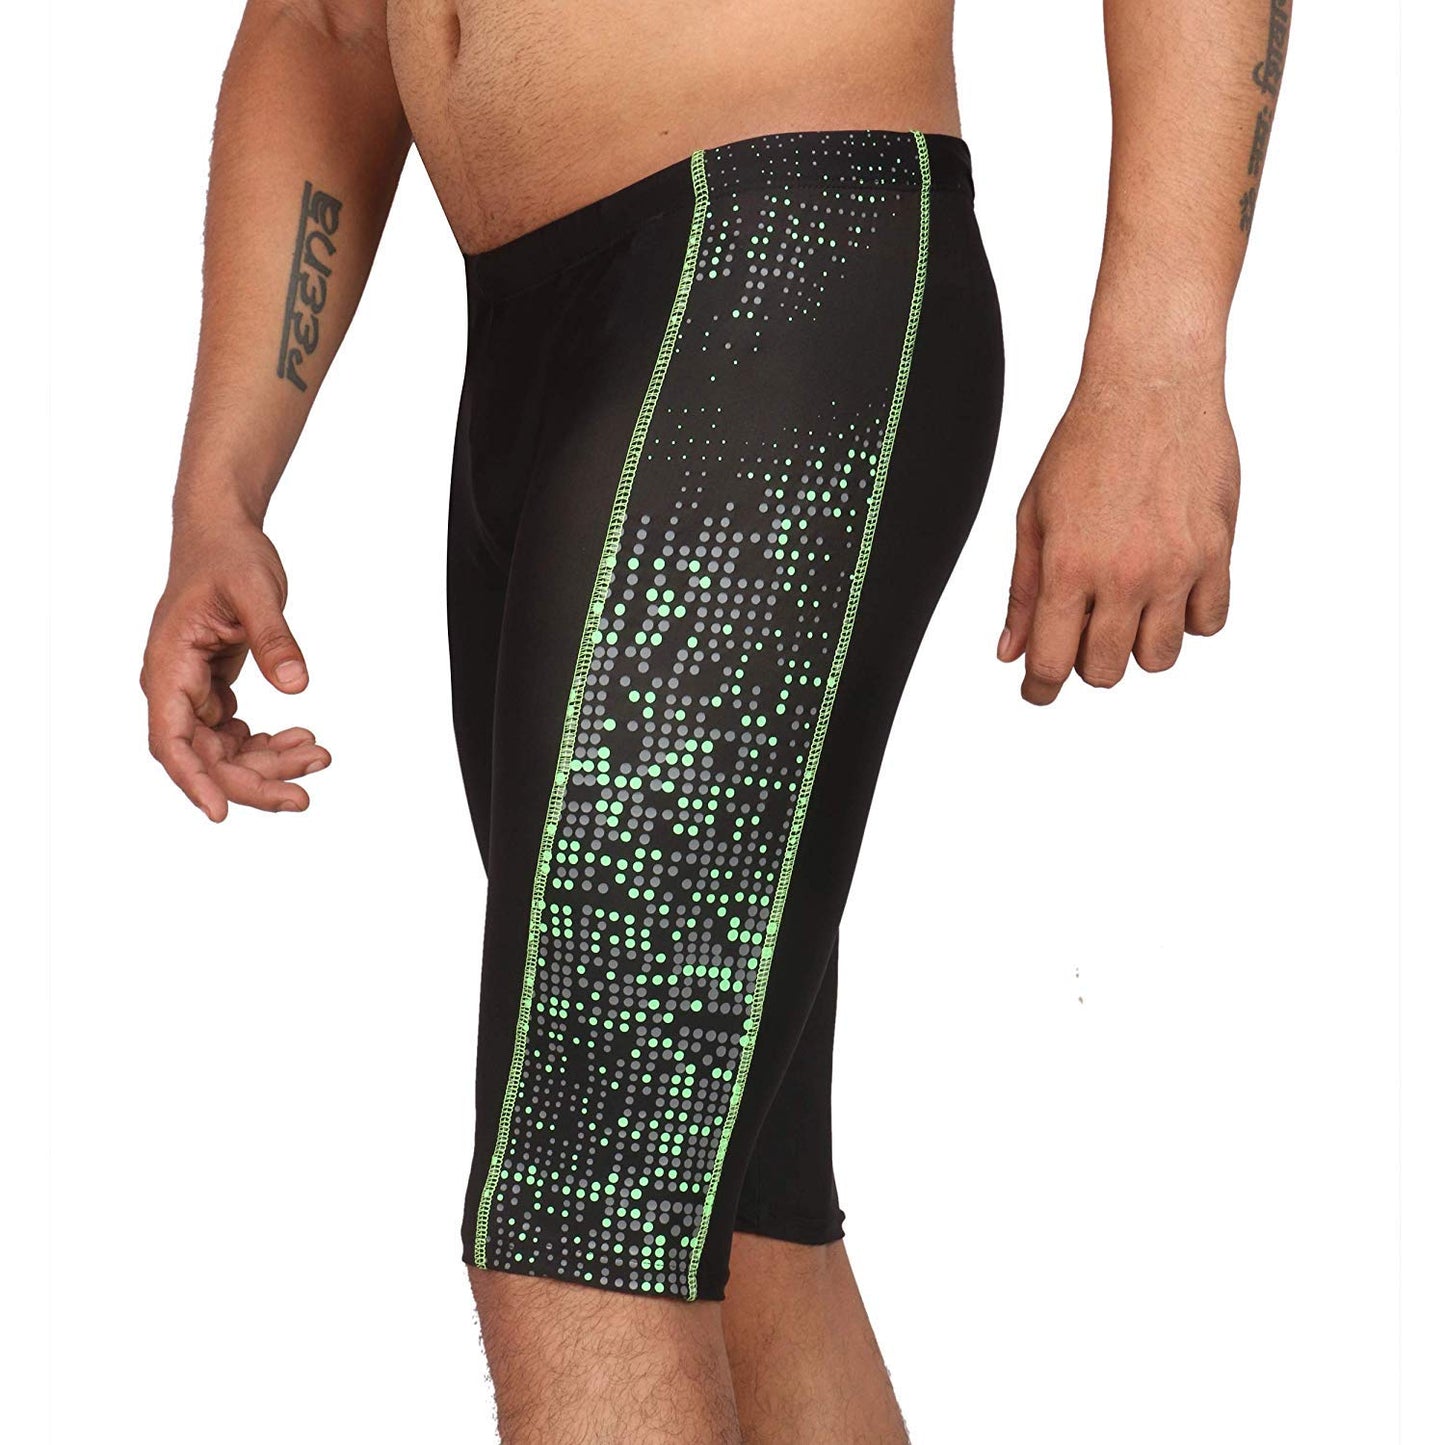 Sports Swimwear Swimming Shorts Jammer for Men, Black/Green - Best Price online Prokicksports.com